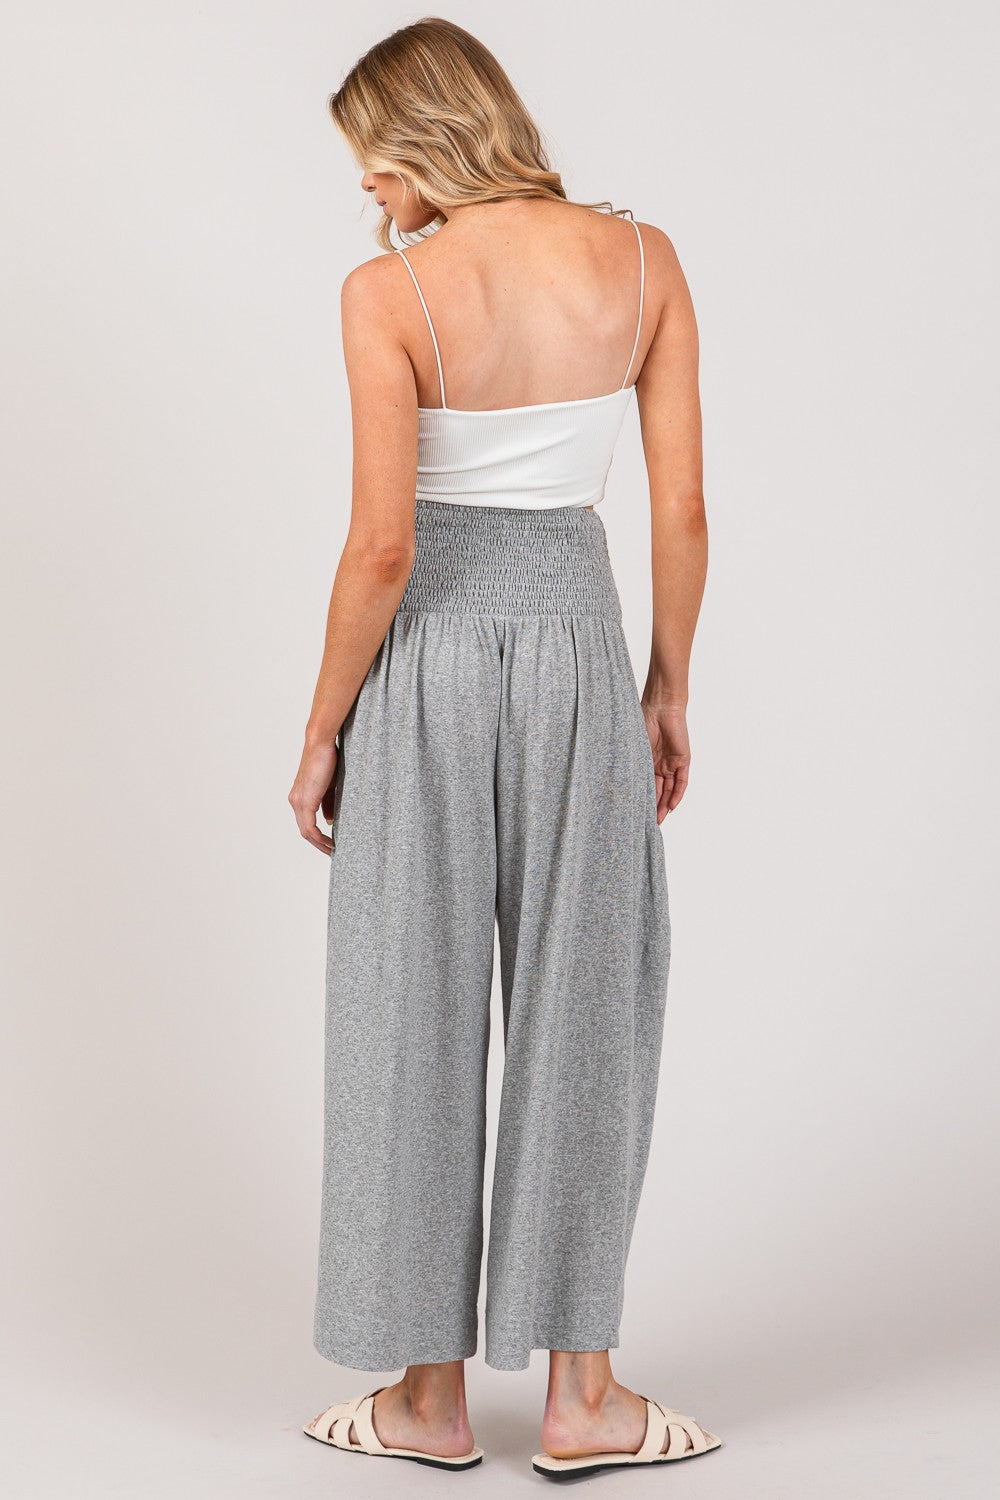 TEEK - Gray Drawstring Smocked High Waist Pants PANTS TEEK Trend   